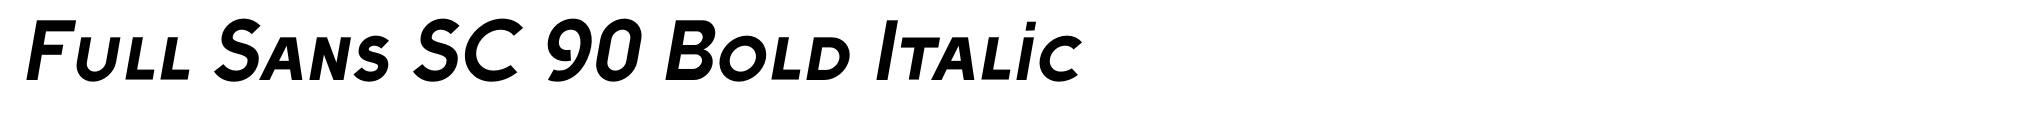 Full Sans SC 90 Bold Italic image